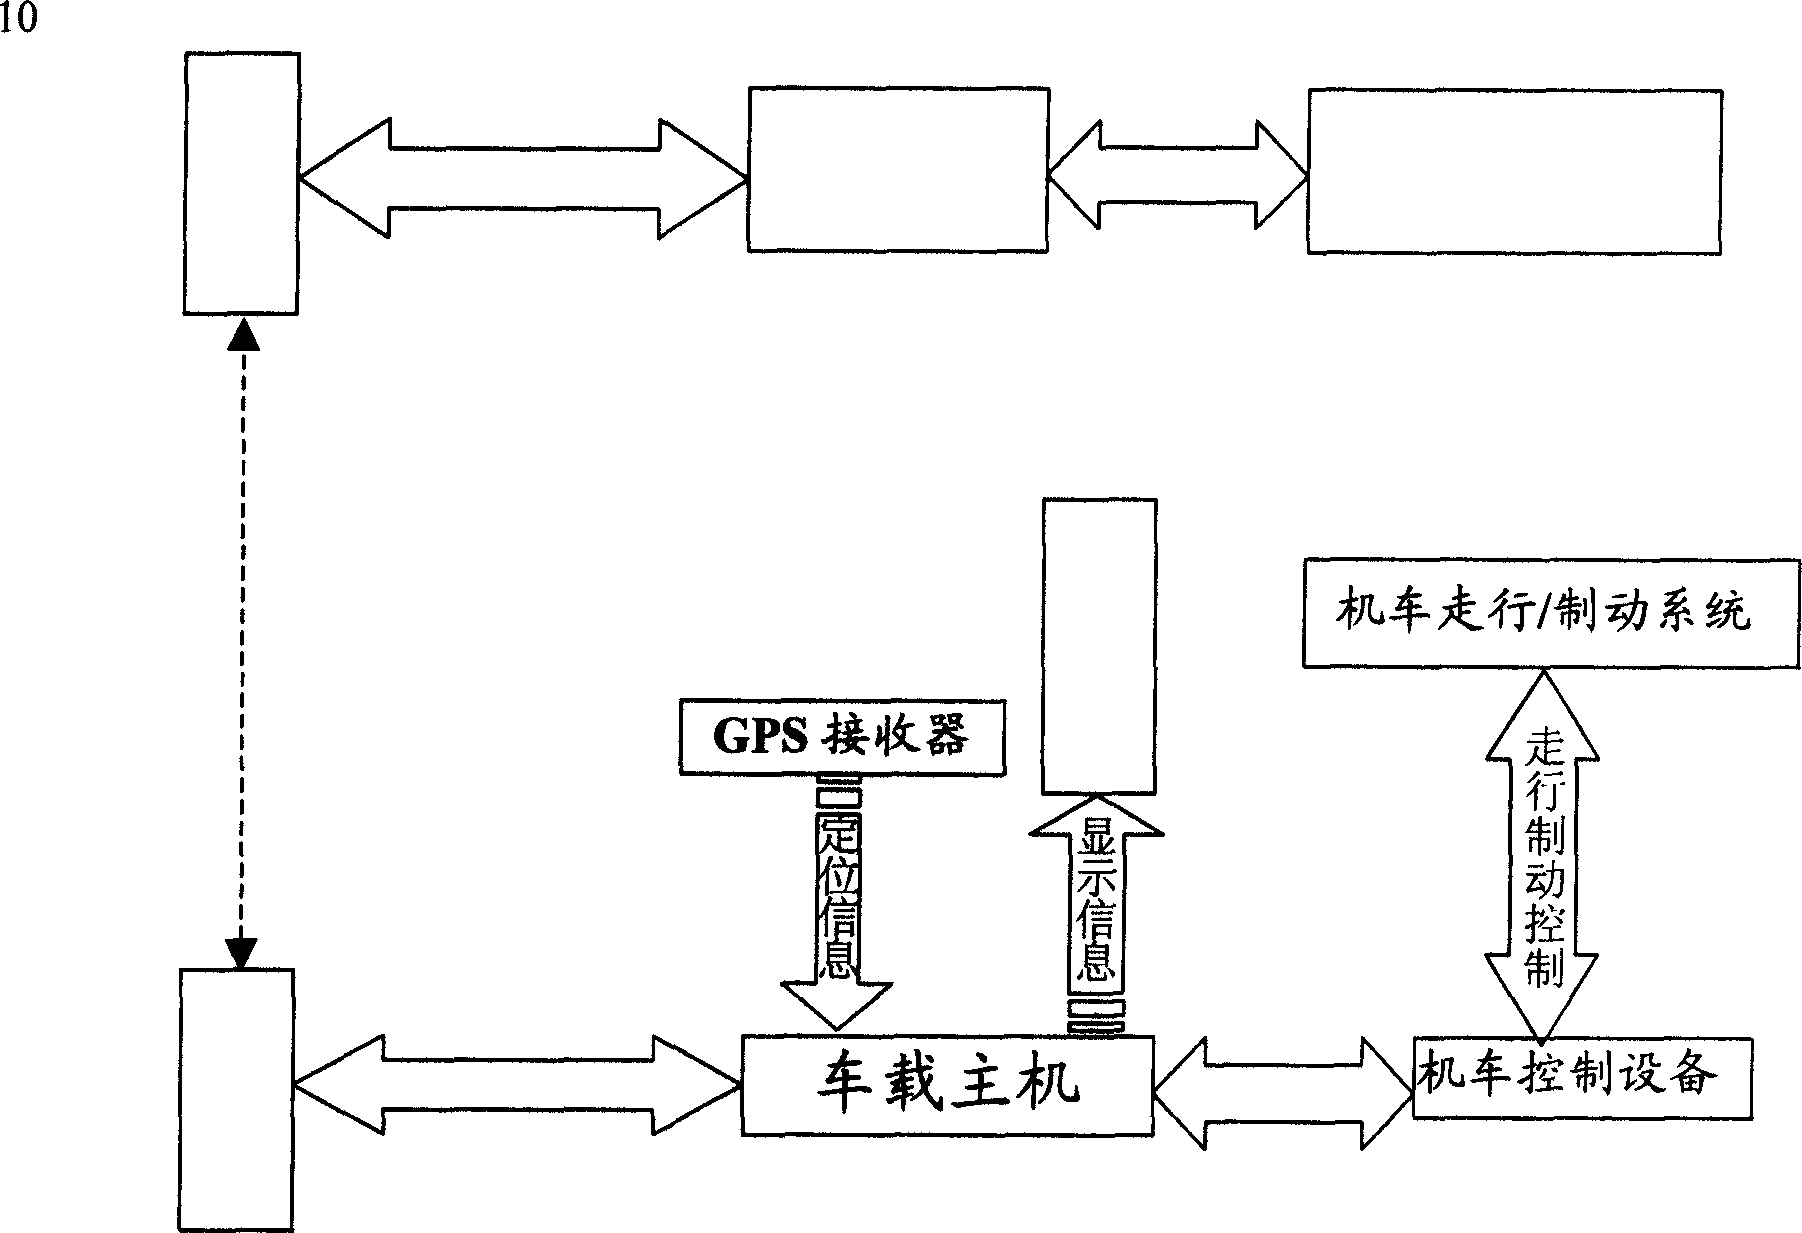 Automatization system for marshalling station pispatching train